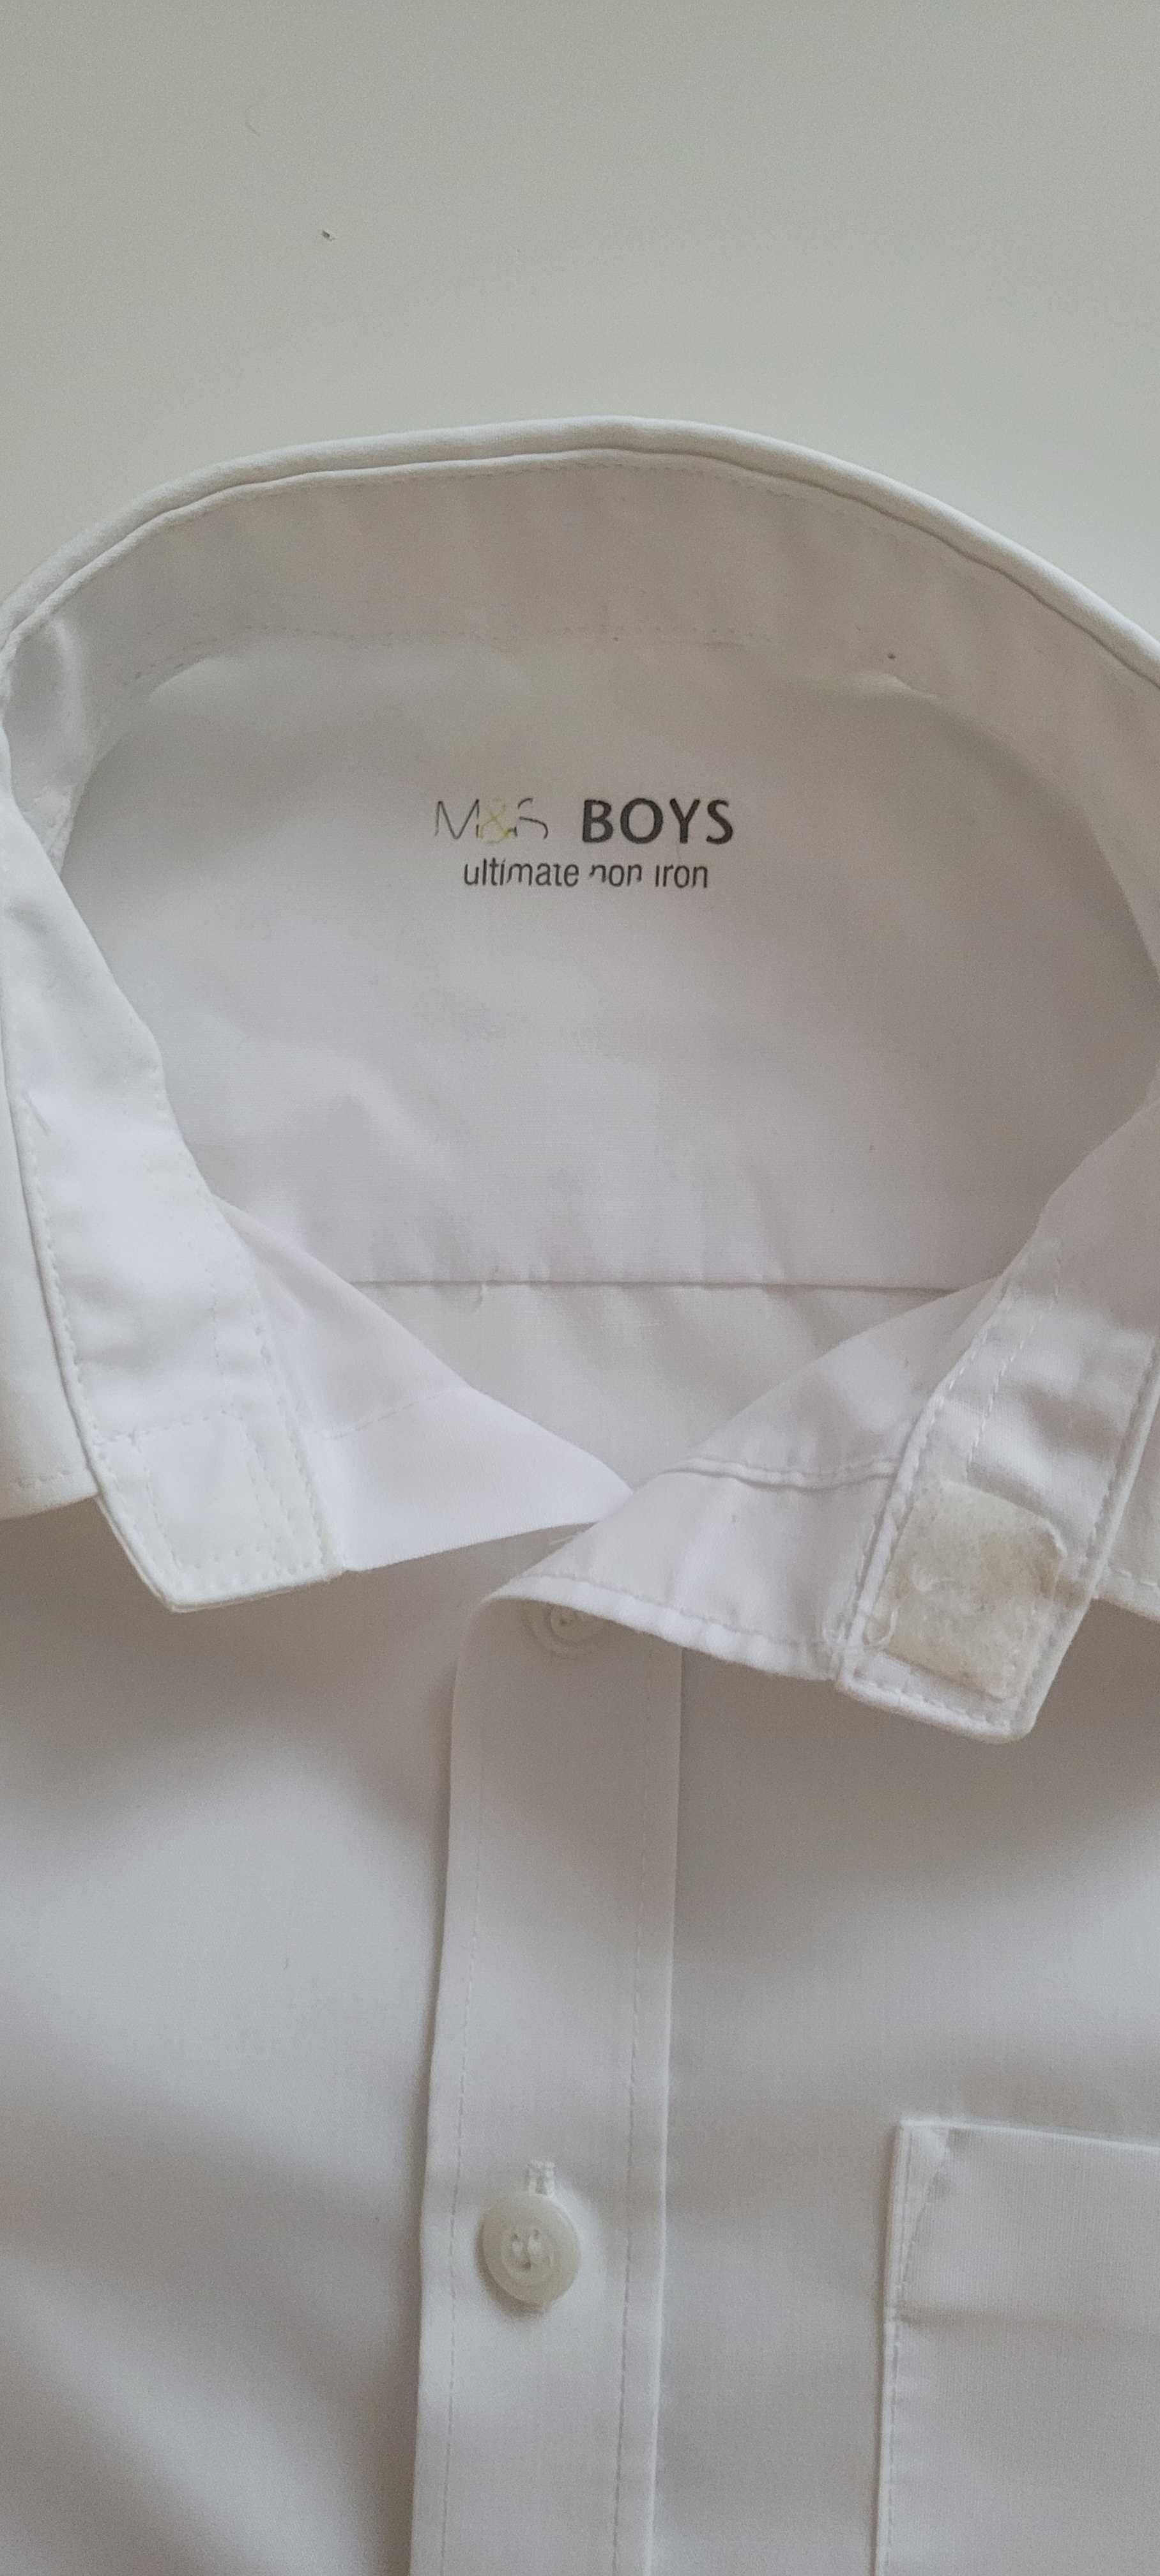 Koszula M&S boys ultimate non iron biała 8 lat, 128